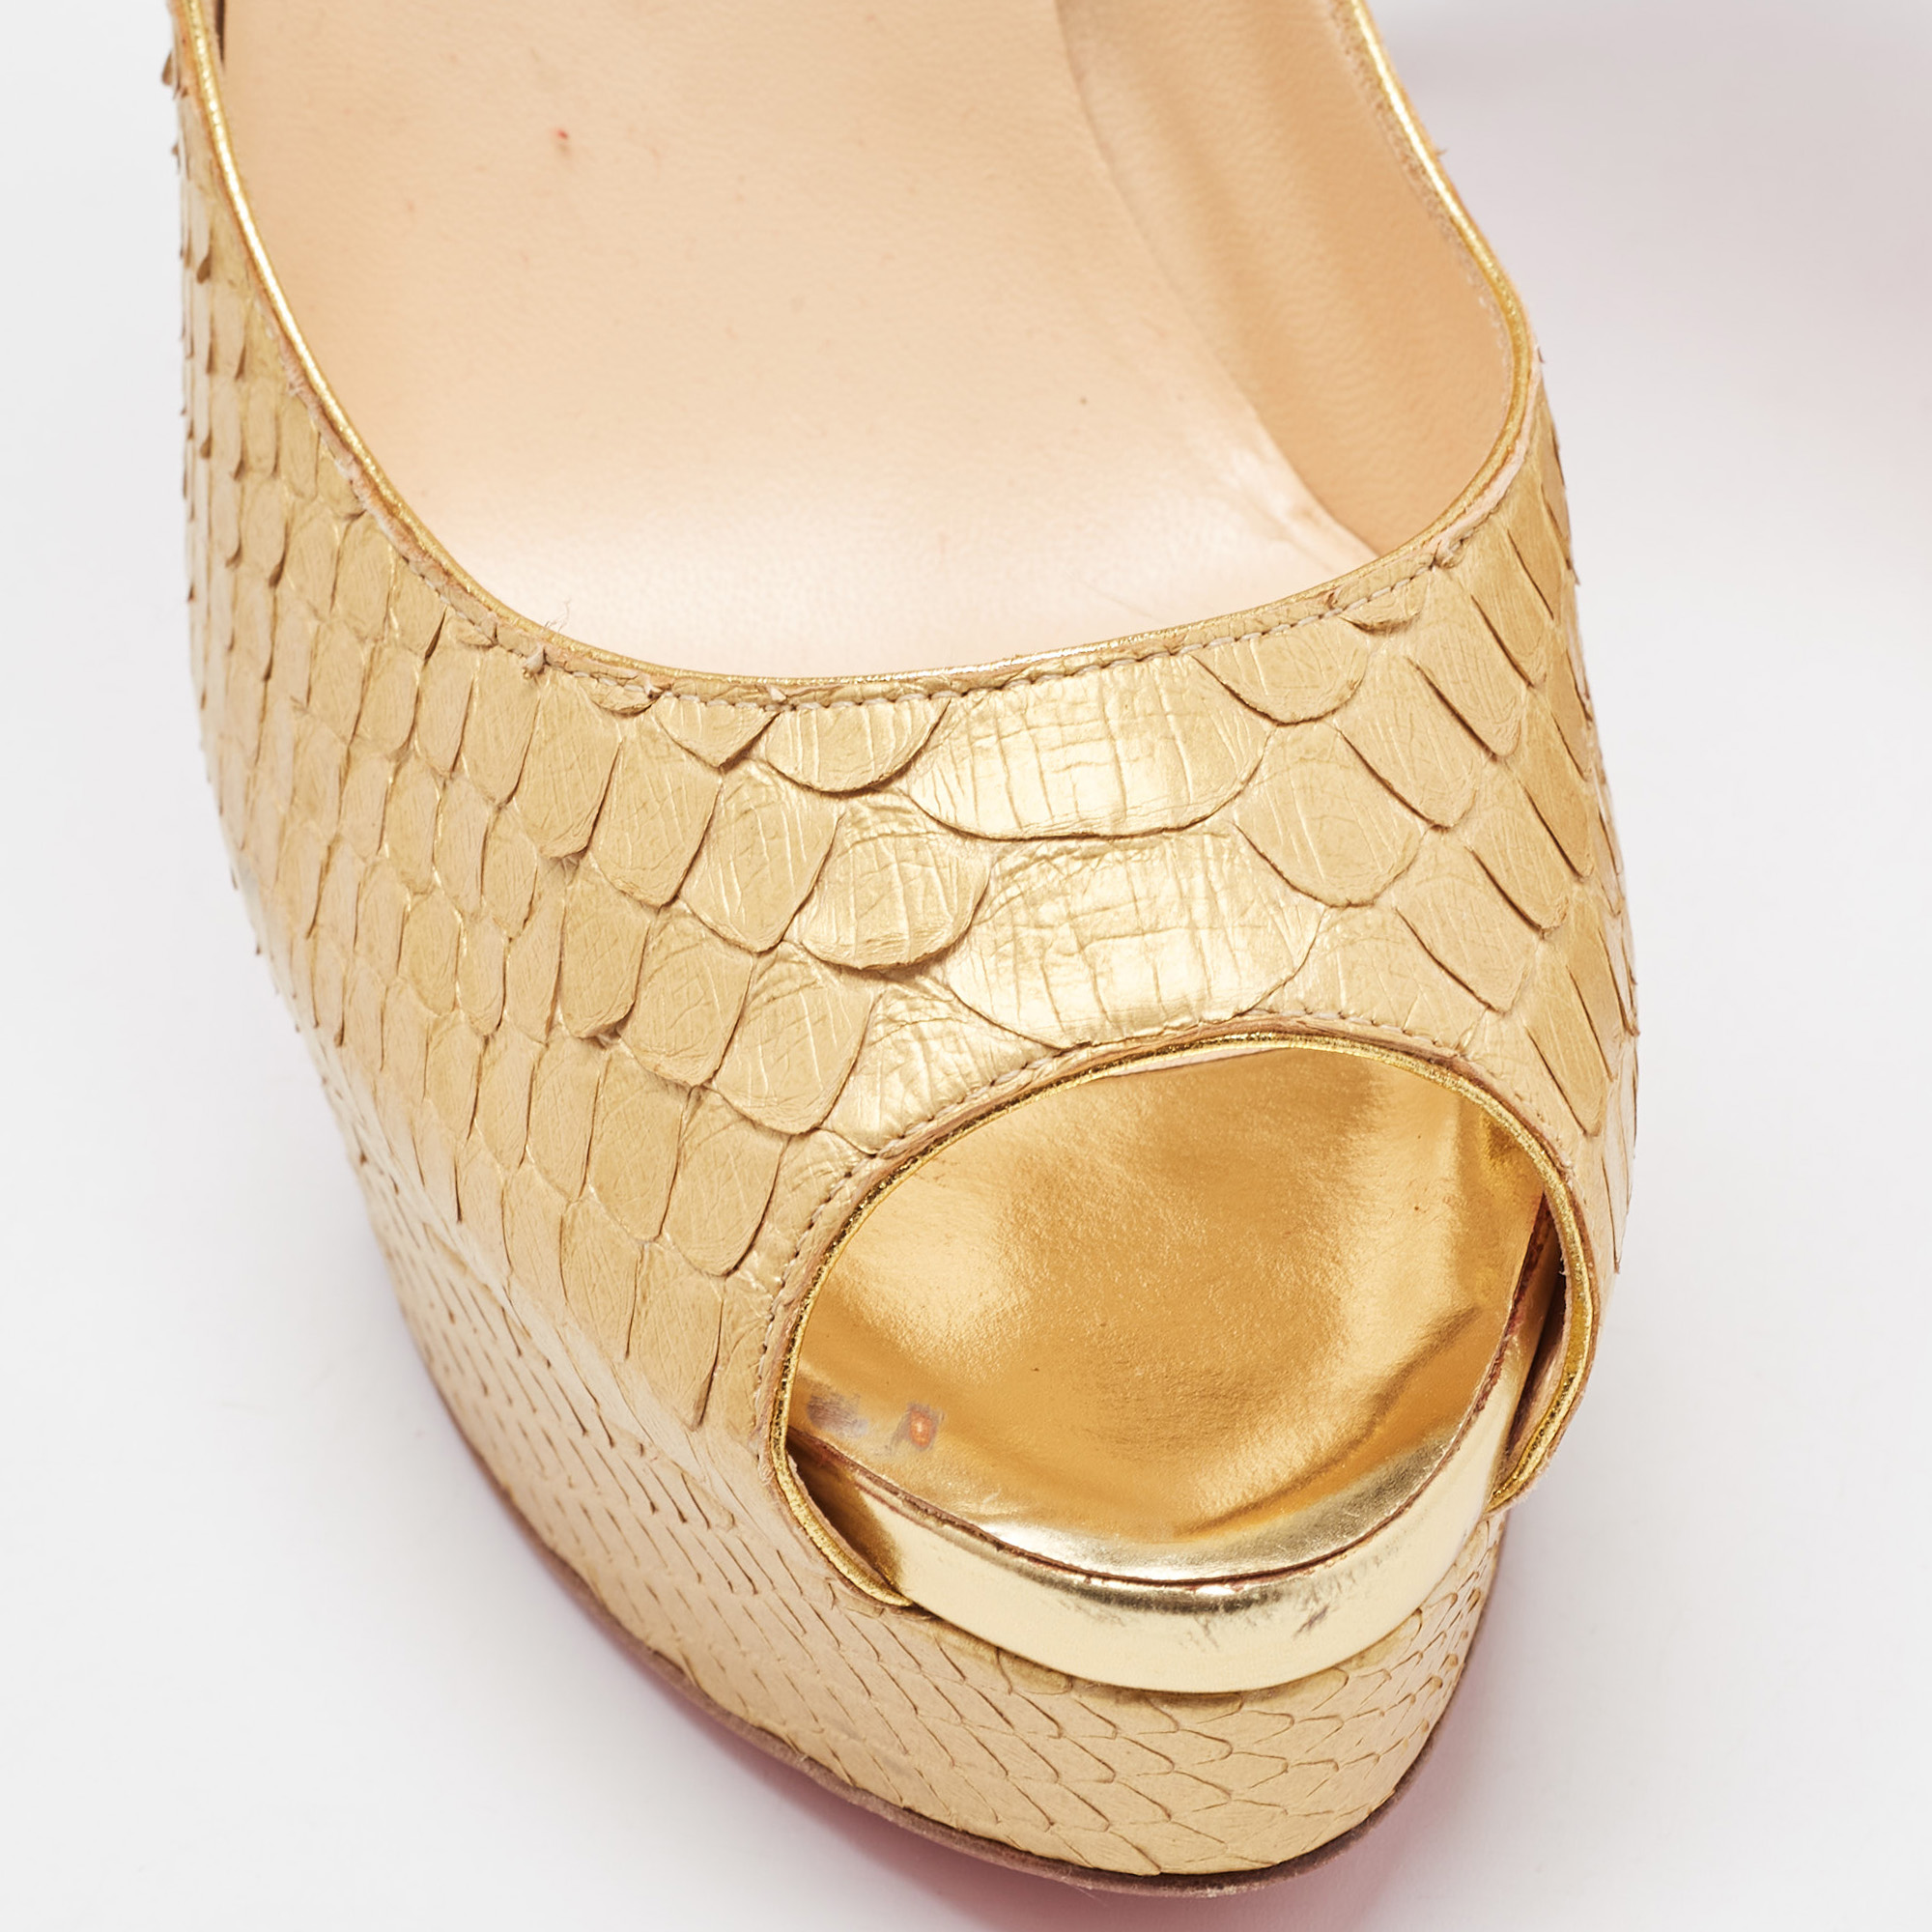 Christian Louboutin Gold Python Lady Peep Toe Pumps Size 40